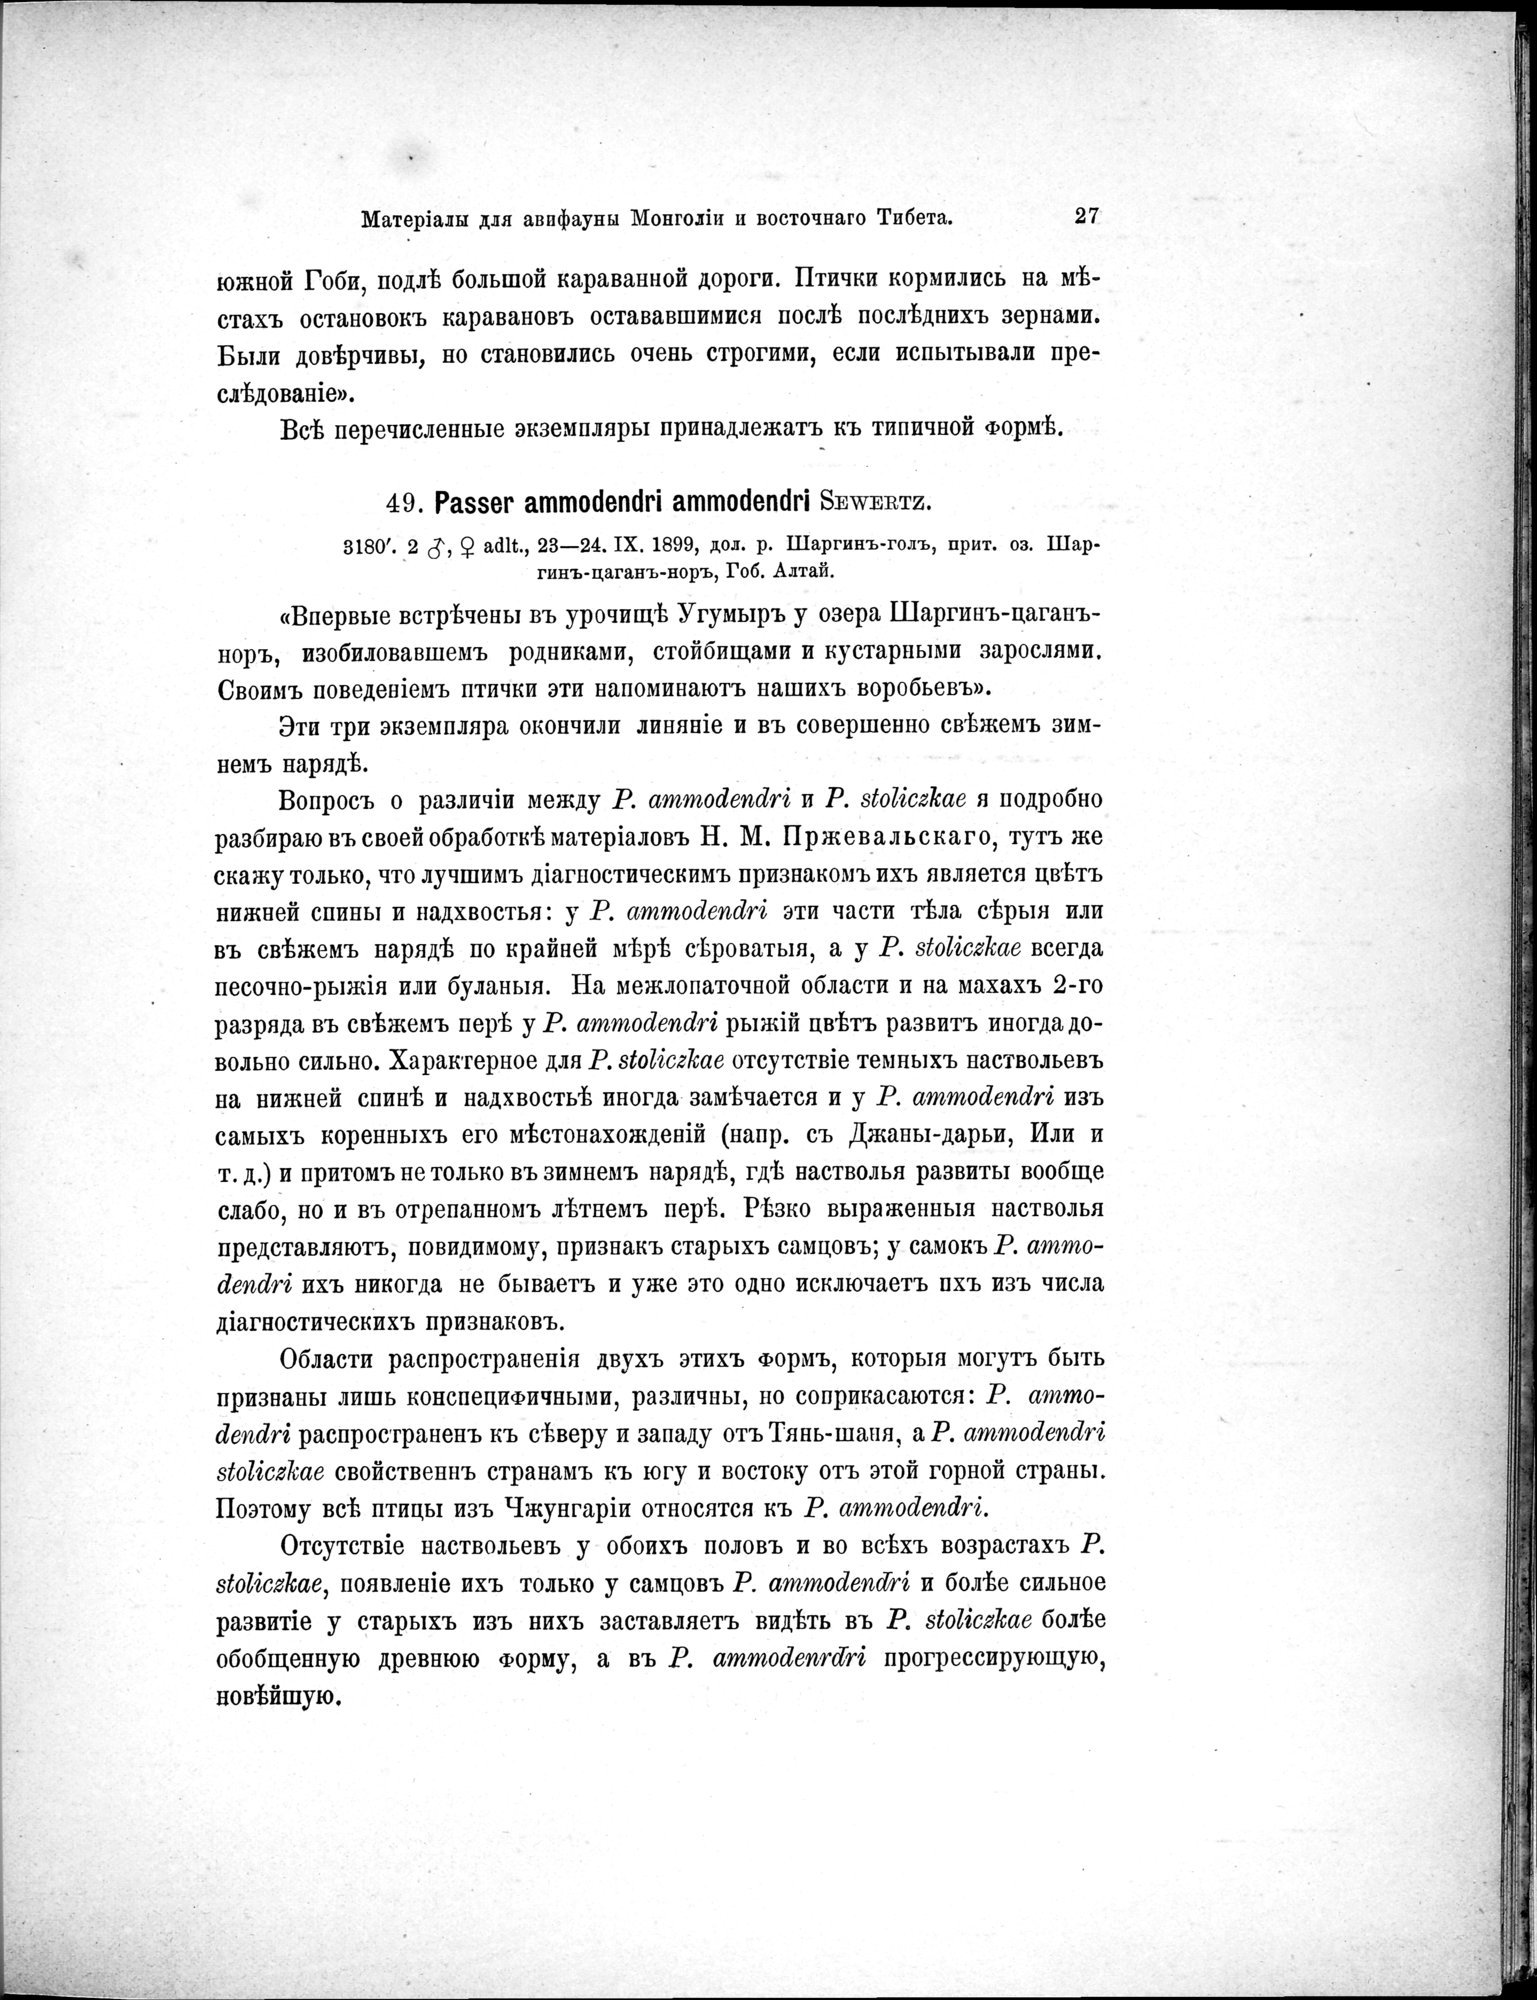 Mongoliia i Kam : vol.5 / Page 99 (Grayscale High Resolution Image)